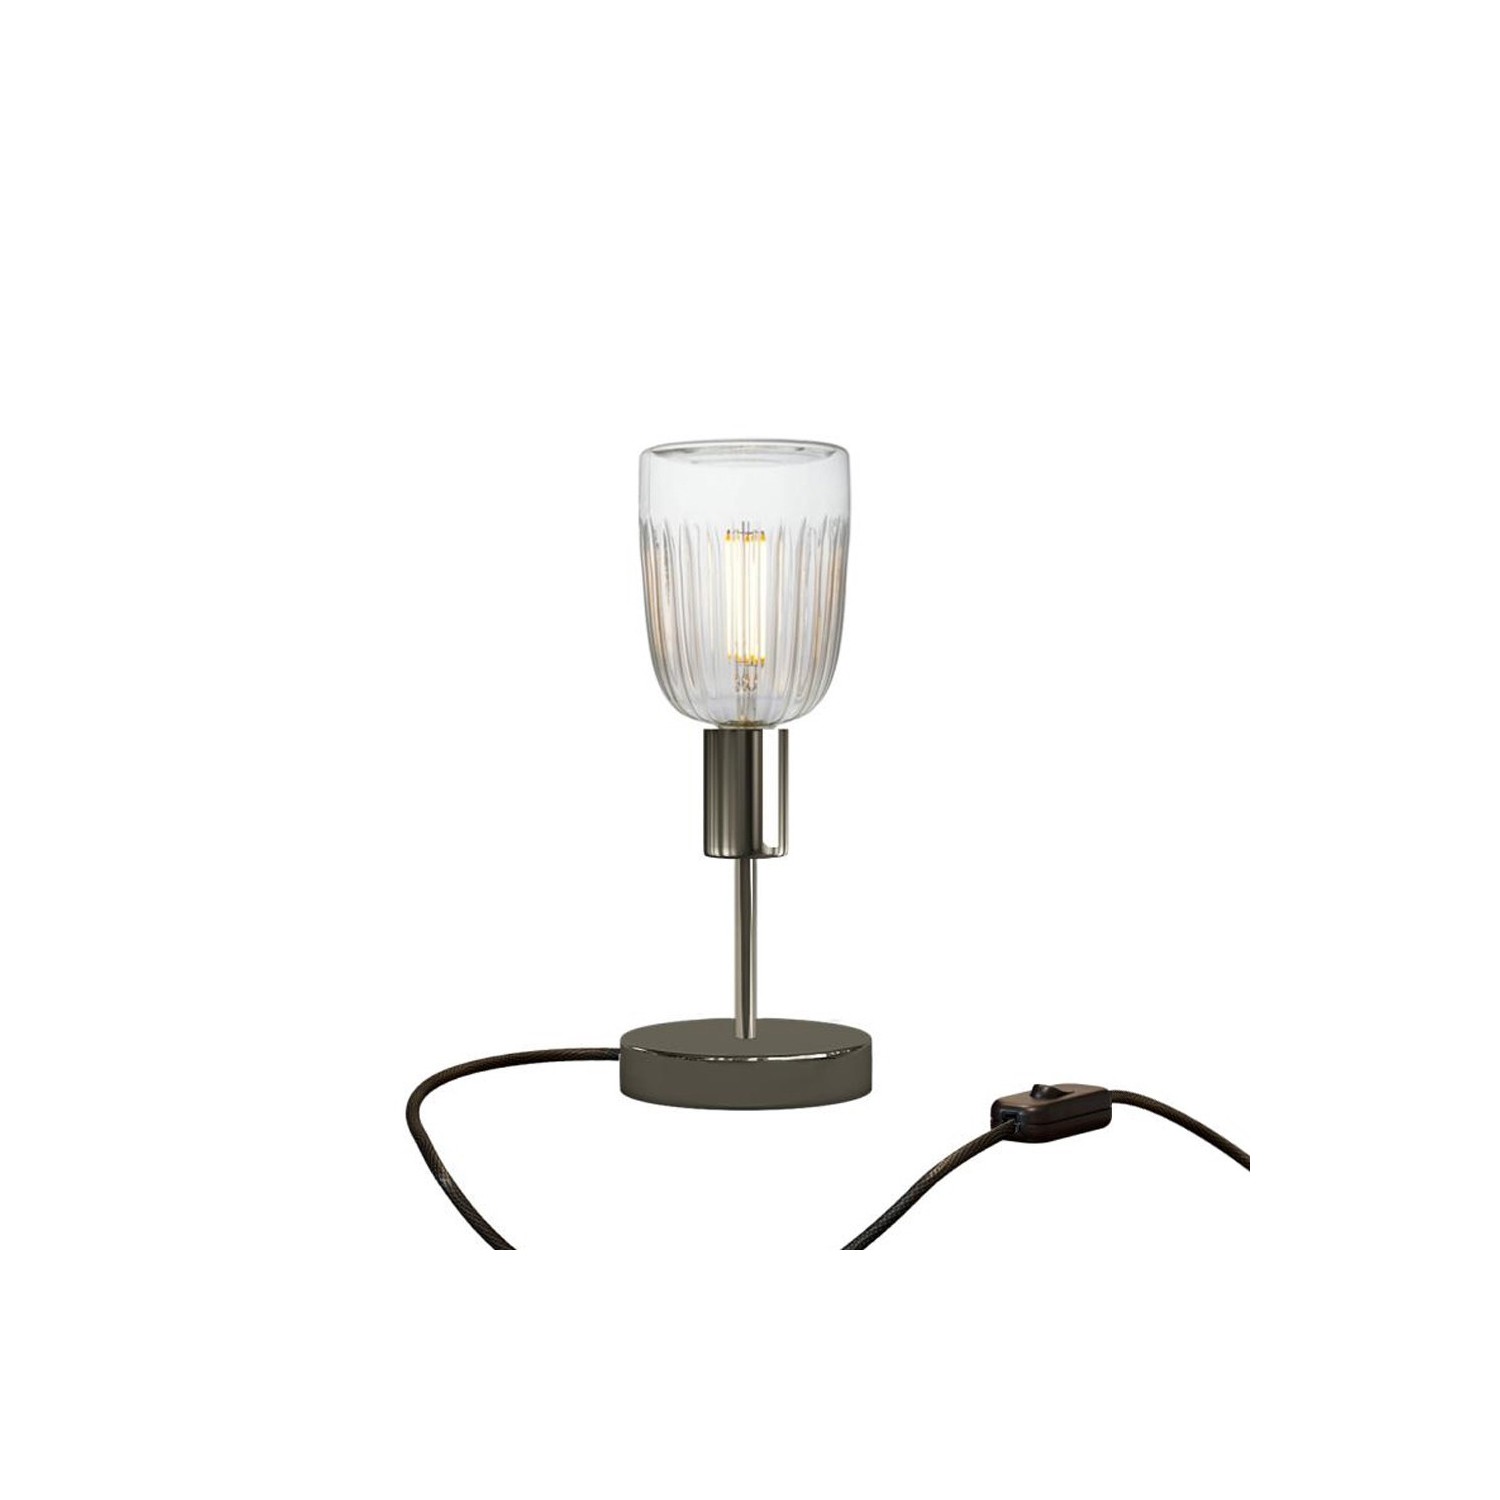 Alzaluce Tiche Metal Table Lamp